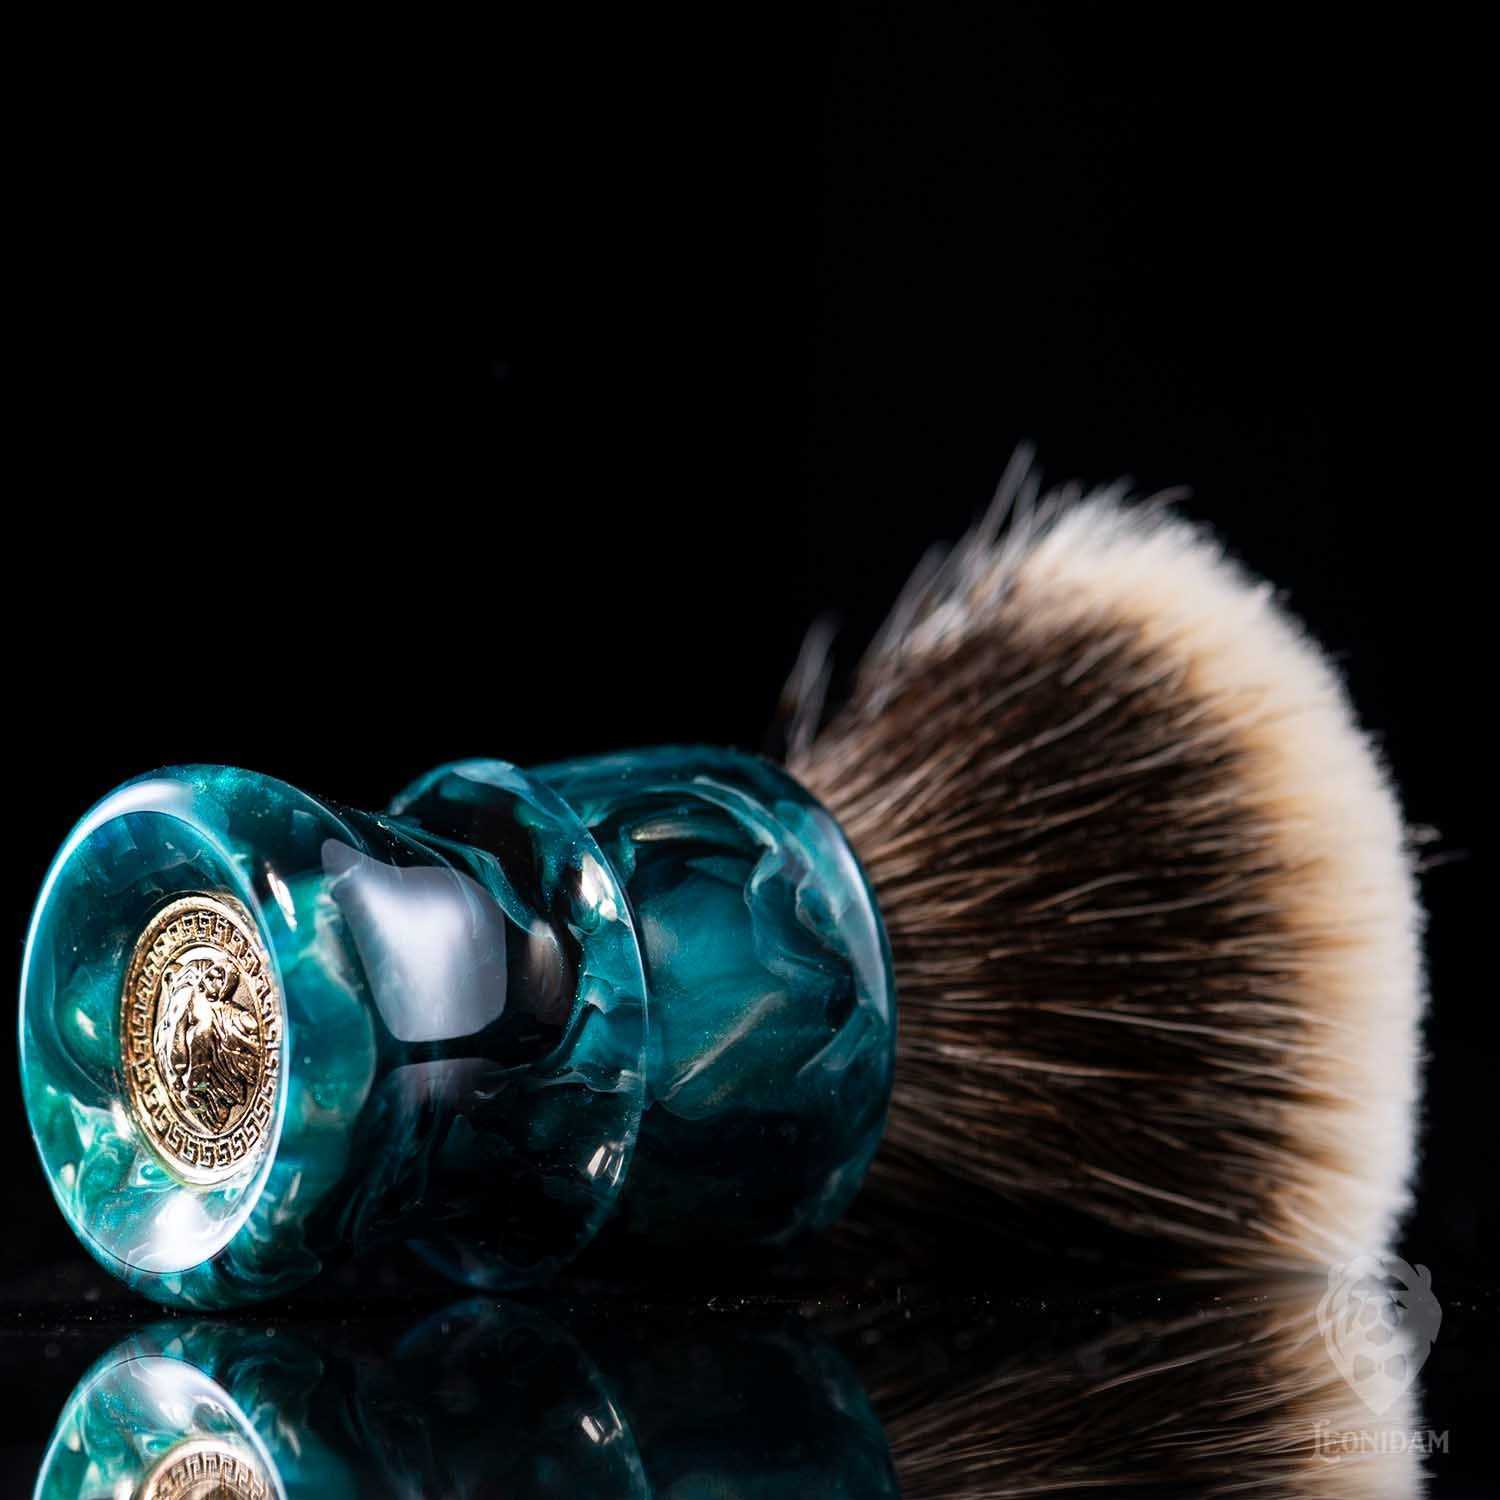 Handmade Shaving Brush "Adonis" 26/28mm